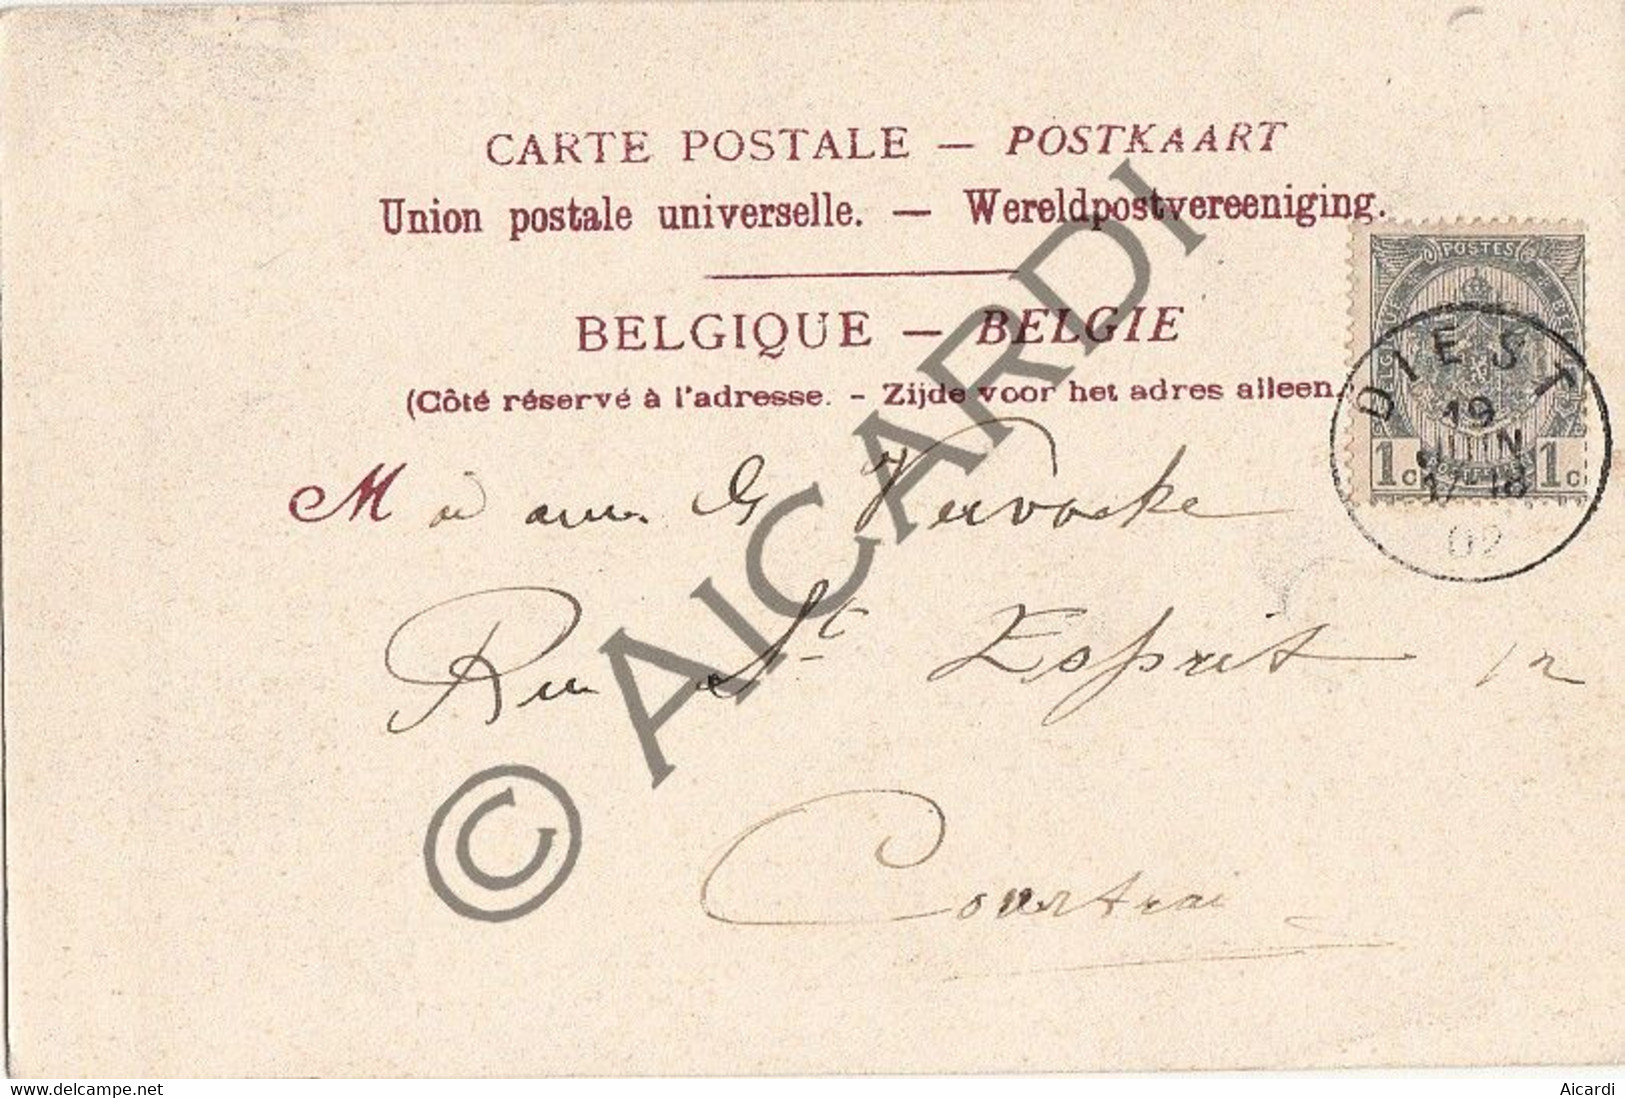 Carte Postale/Postkaart - DIEST - Vieux Canon Et La Warande  (A270) - Diest